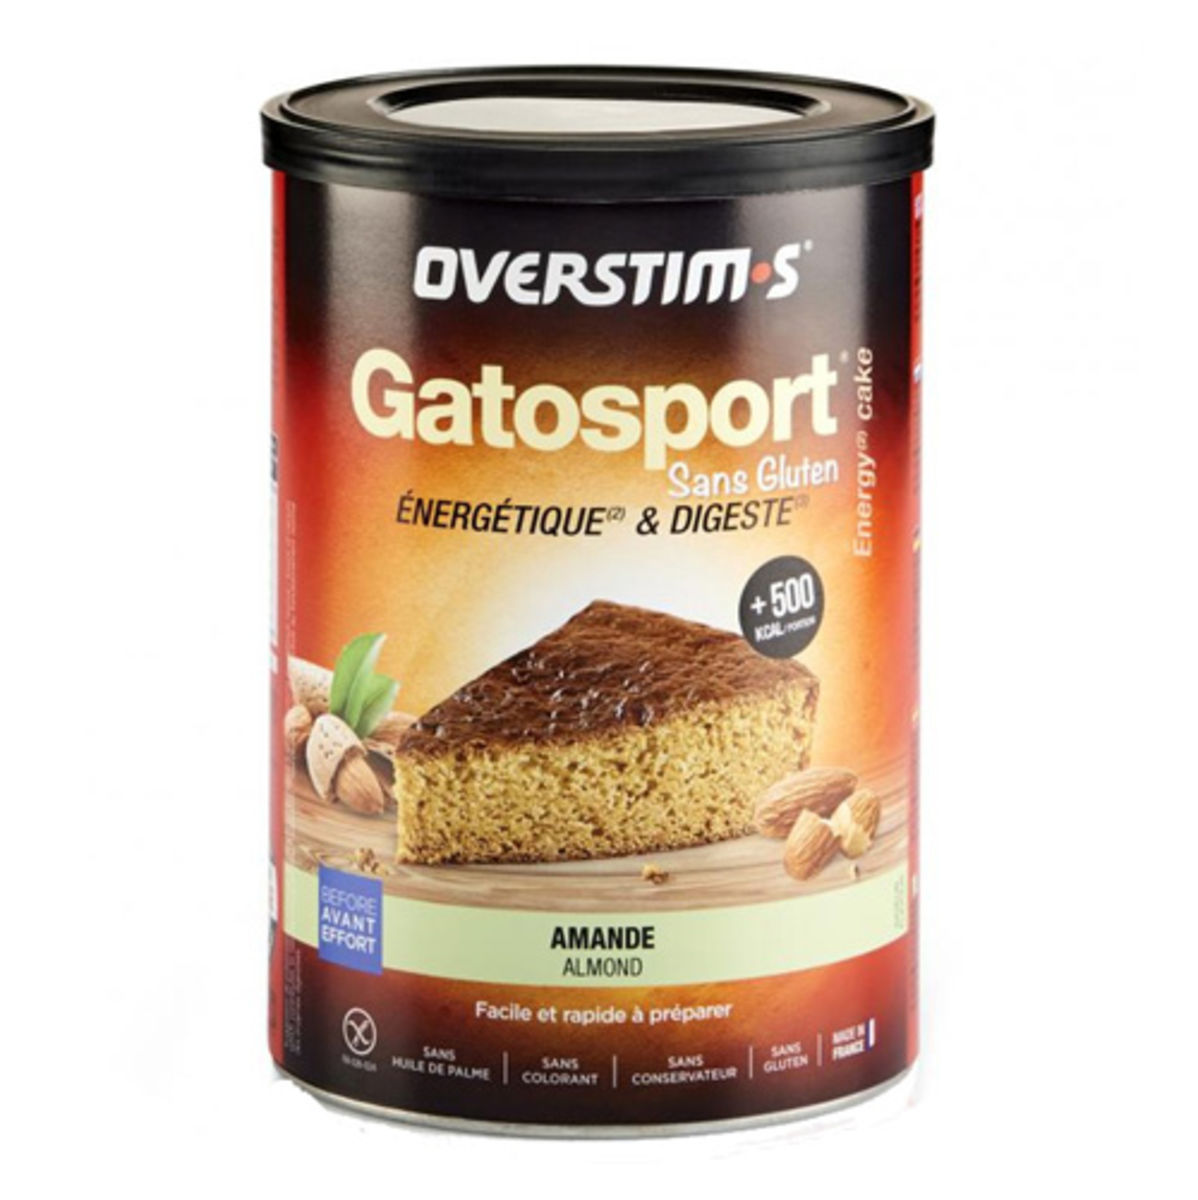 Gatosport Overstim.s - Gâteau énergétique - Amande